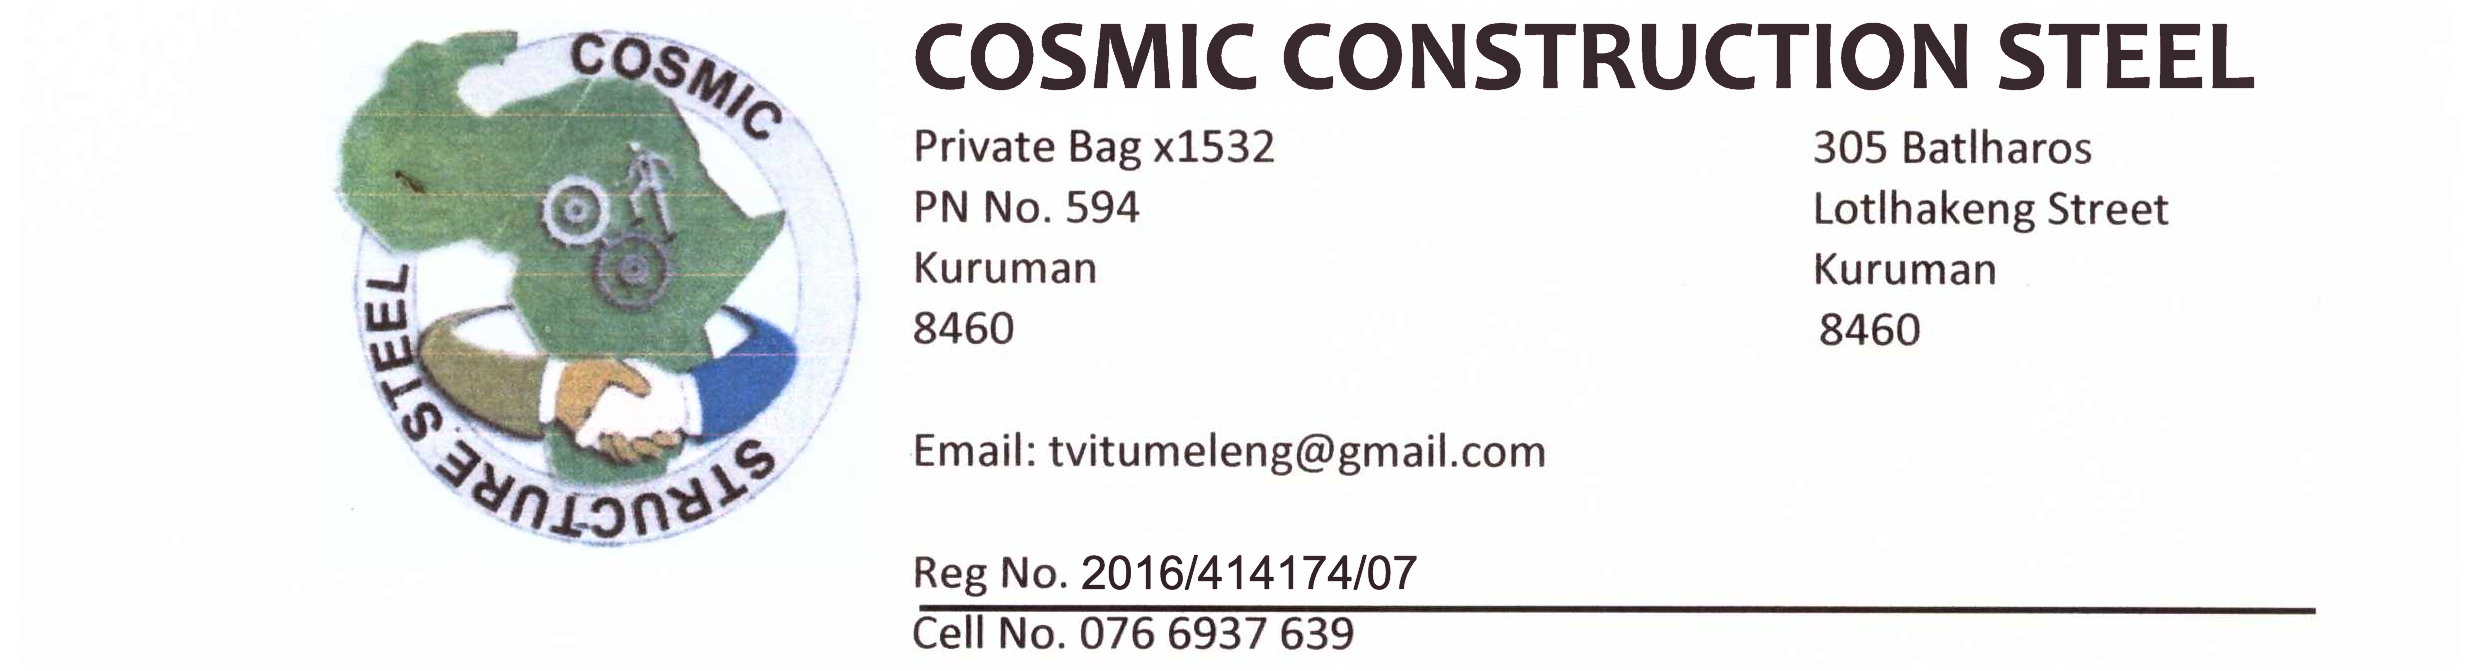 Cosmic Construction Steel (Pty) Ltd (Unverified) logo